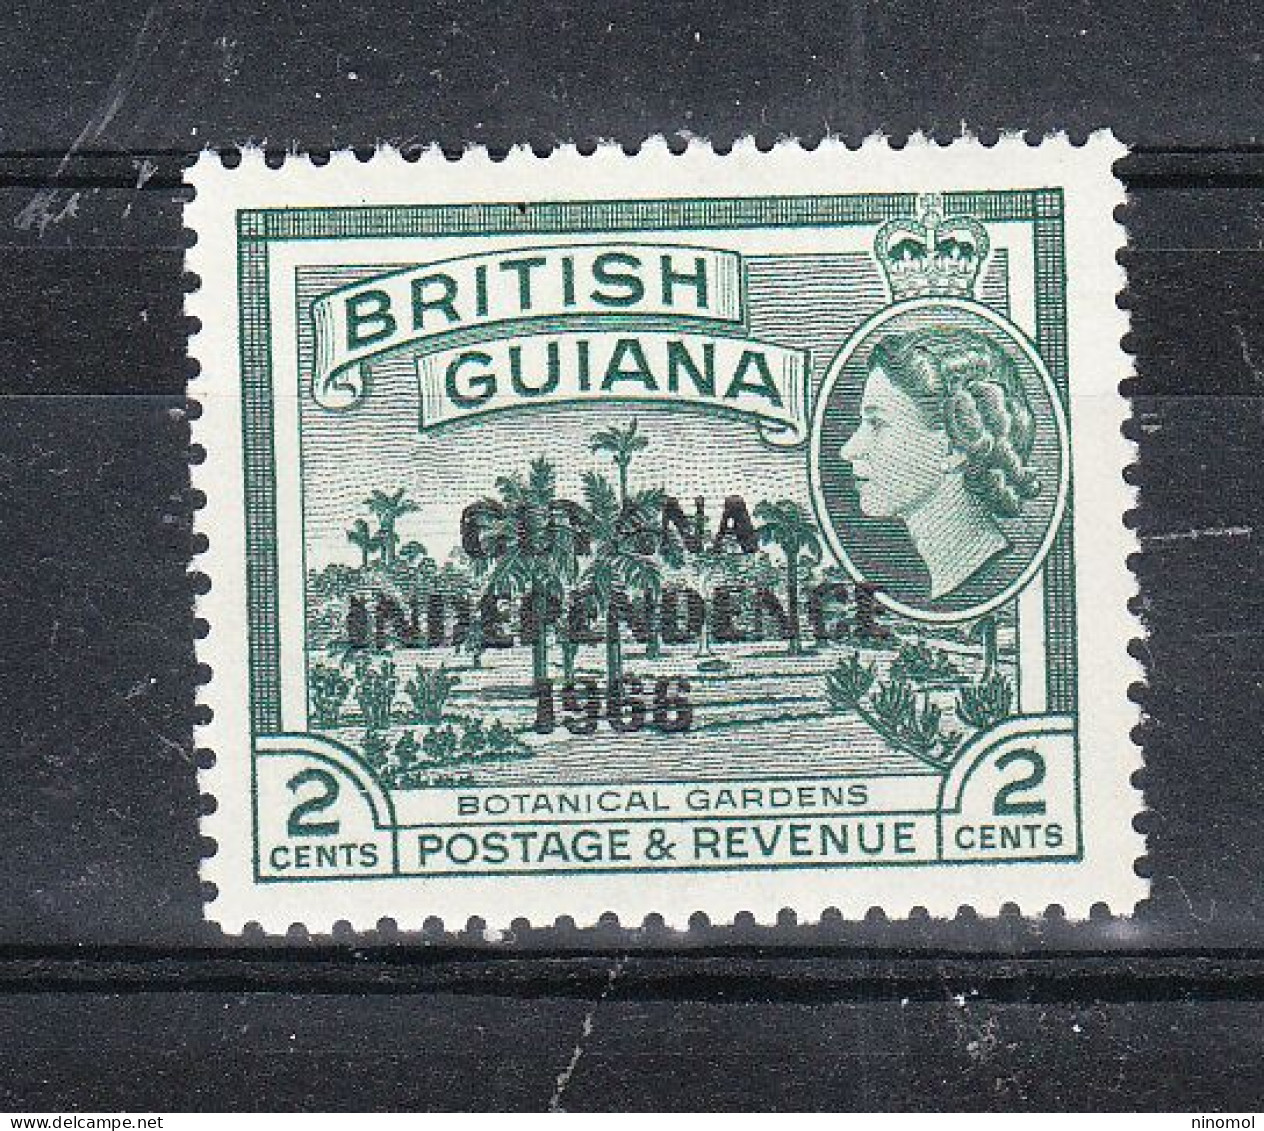 Guyana  Britannica  -   1968. Giardino Botanico. Botanical Garden. Overprinted. MNH, Fresh - Vegetables